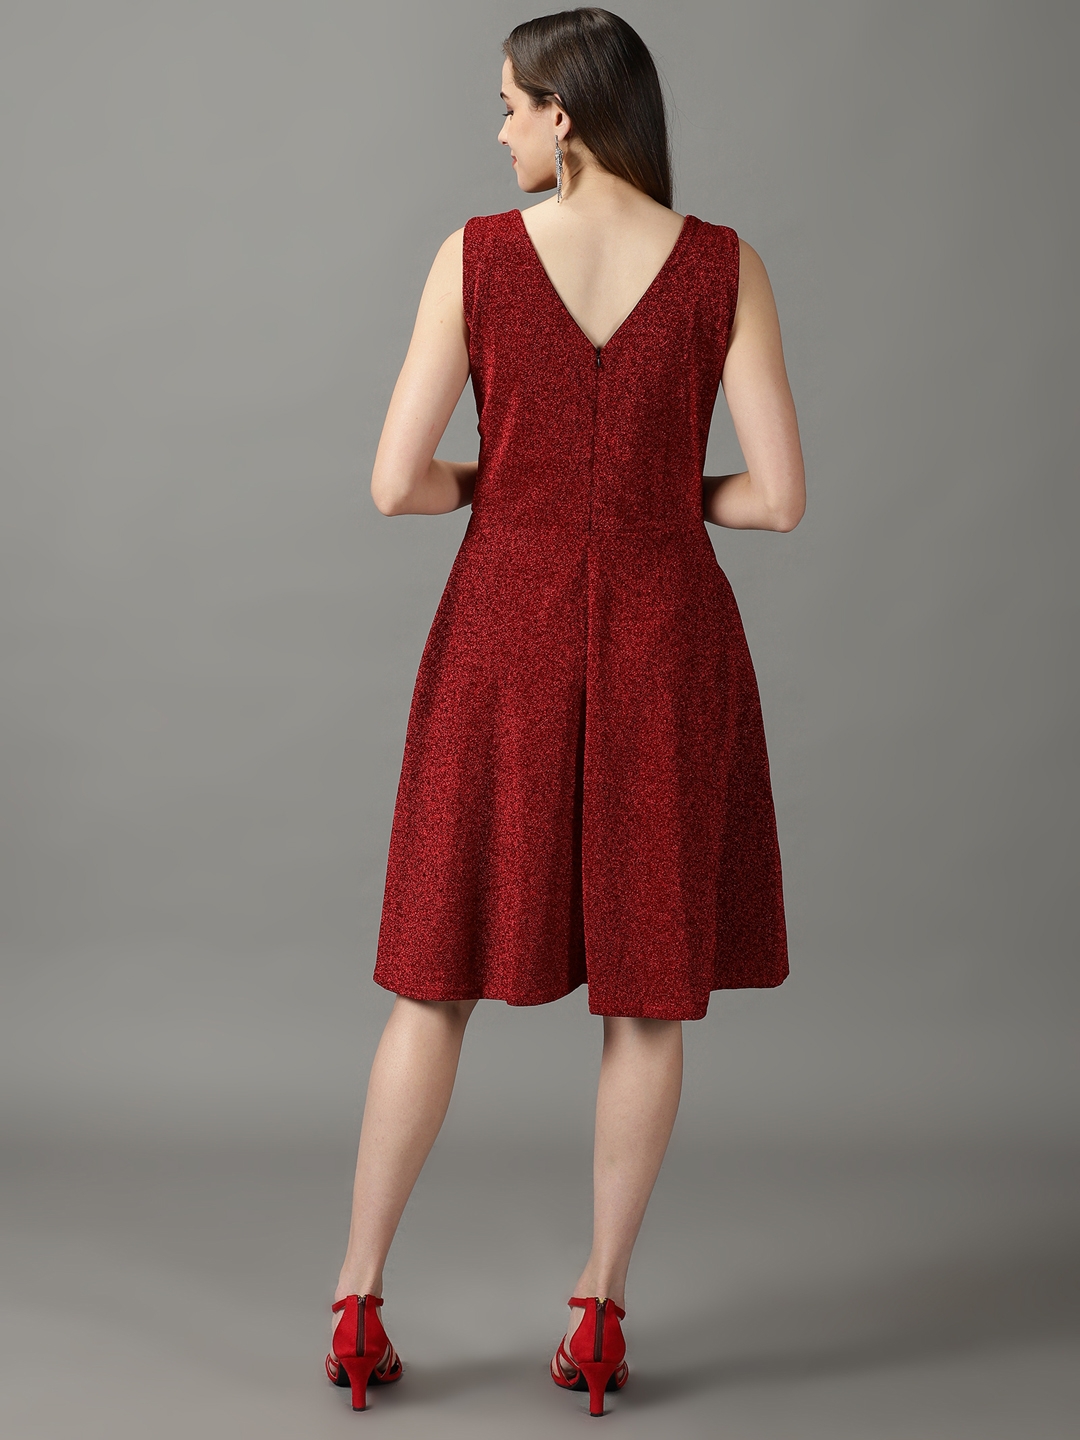 Buy Red Dresses for Women by Rare Online | Ajio.com